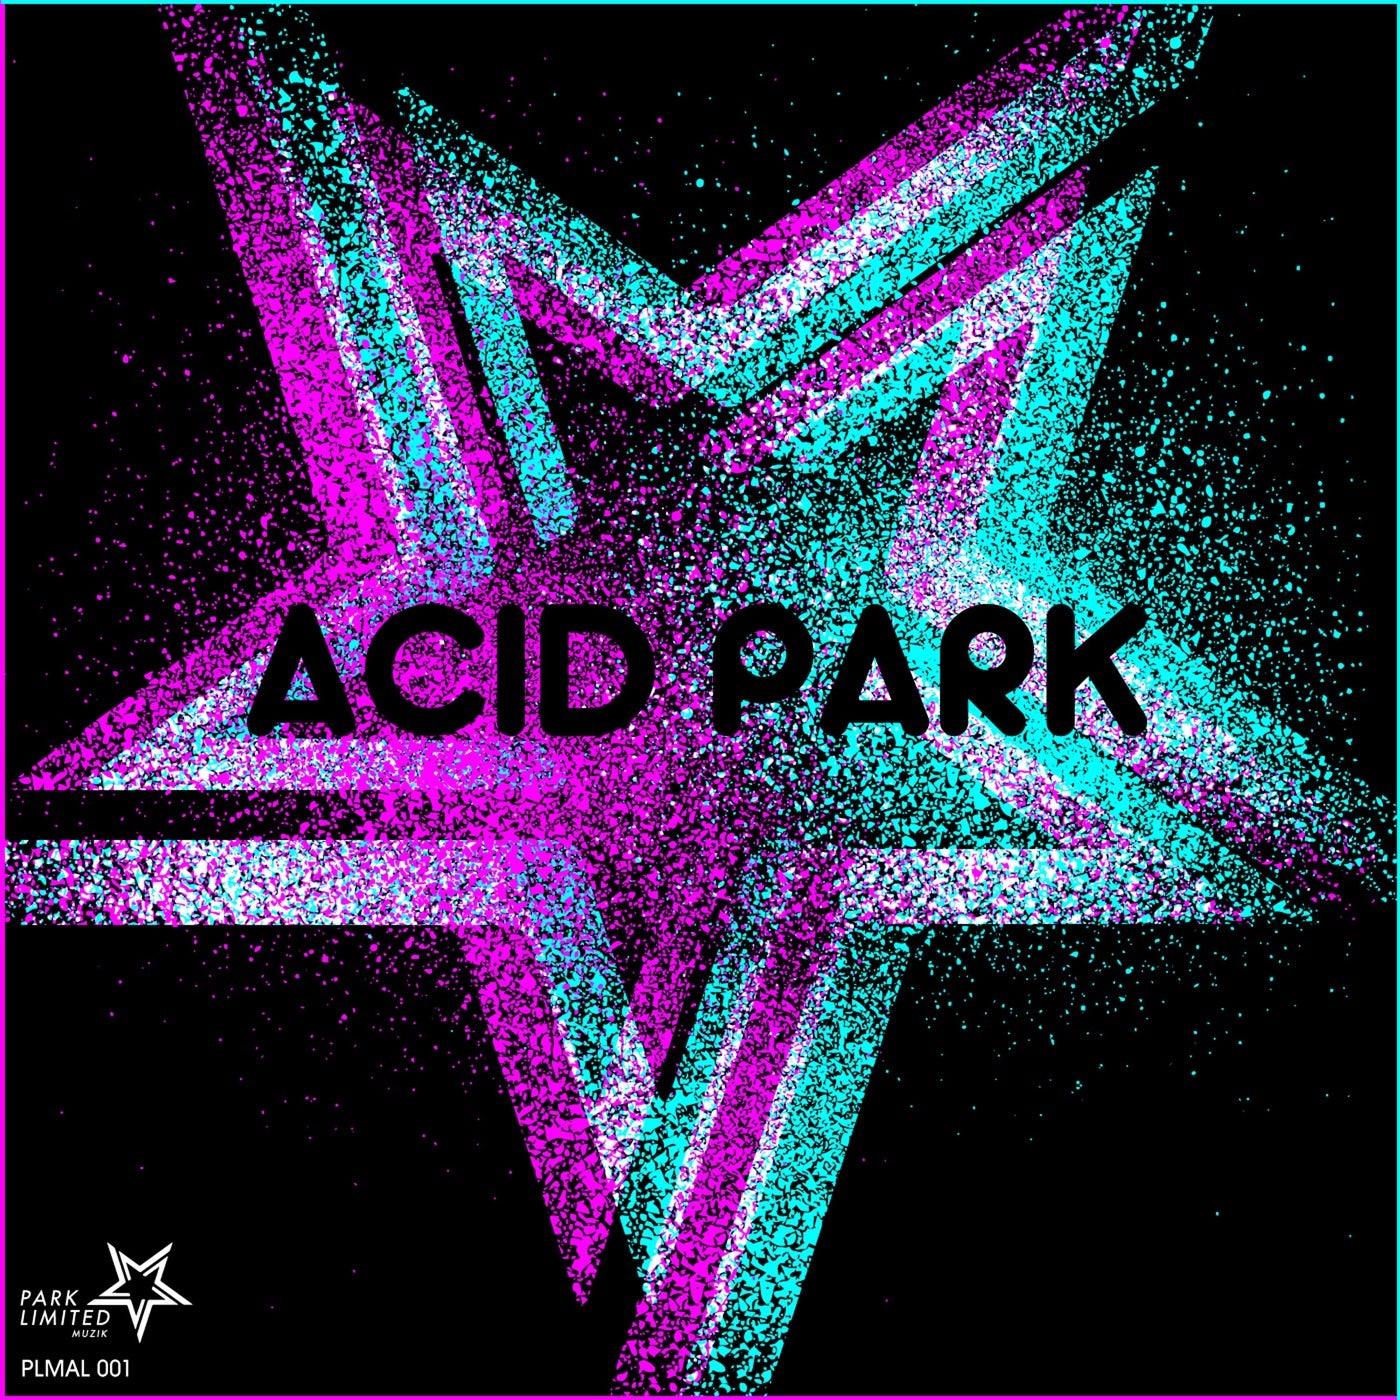 Acid Park